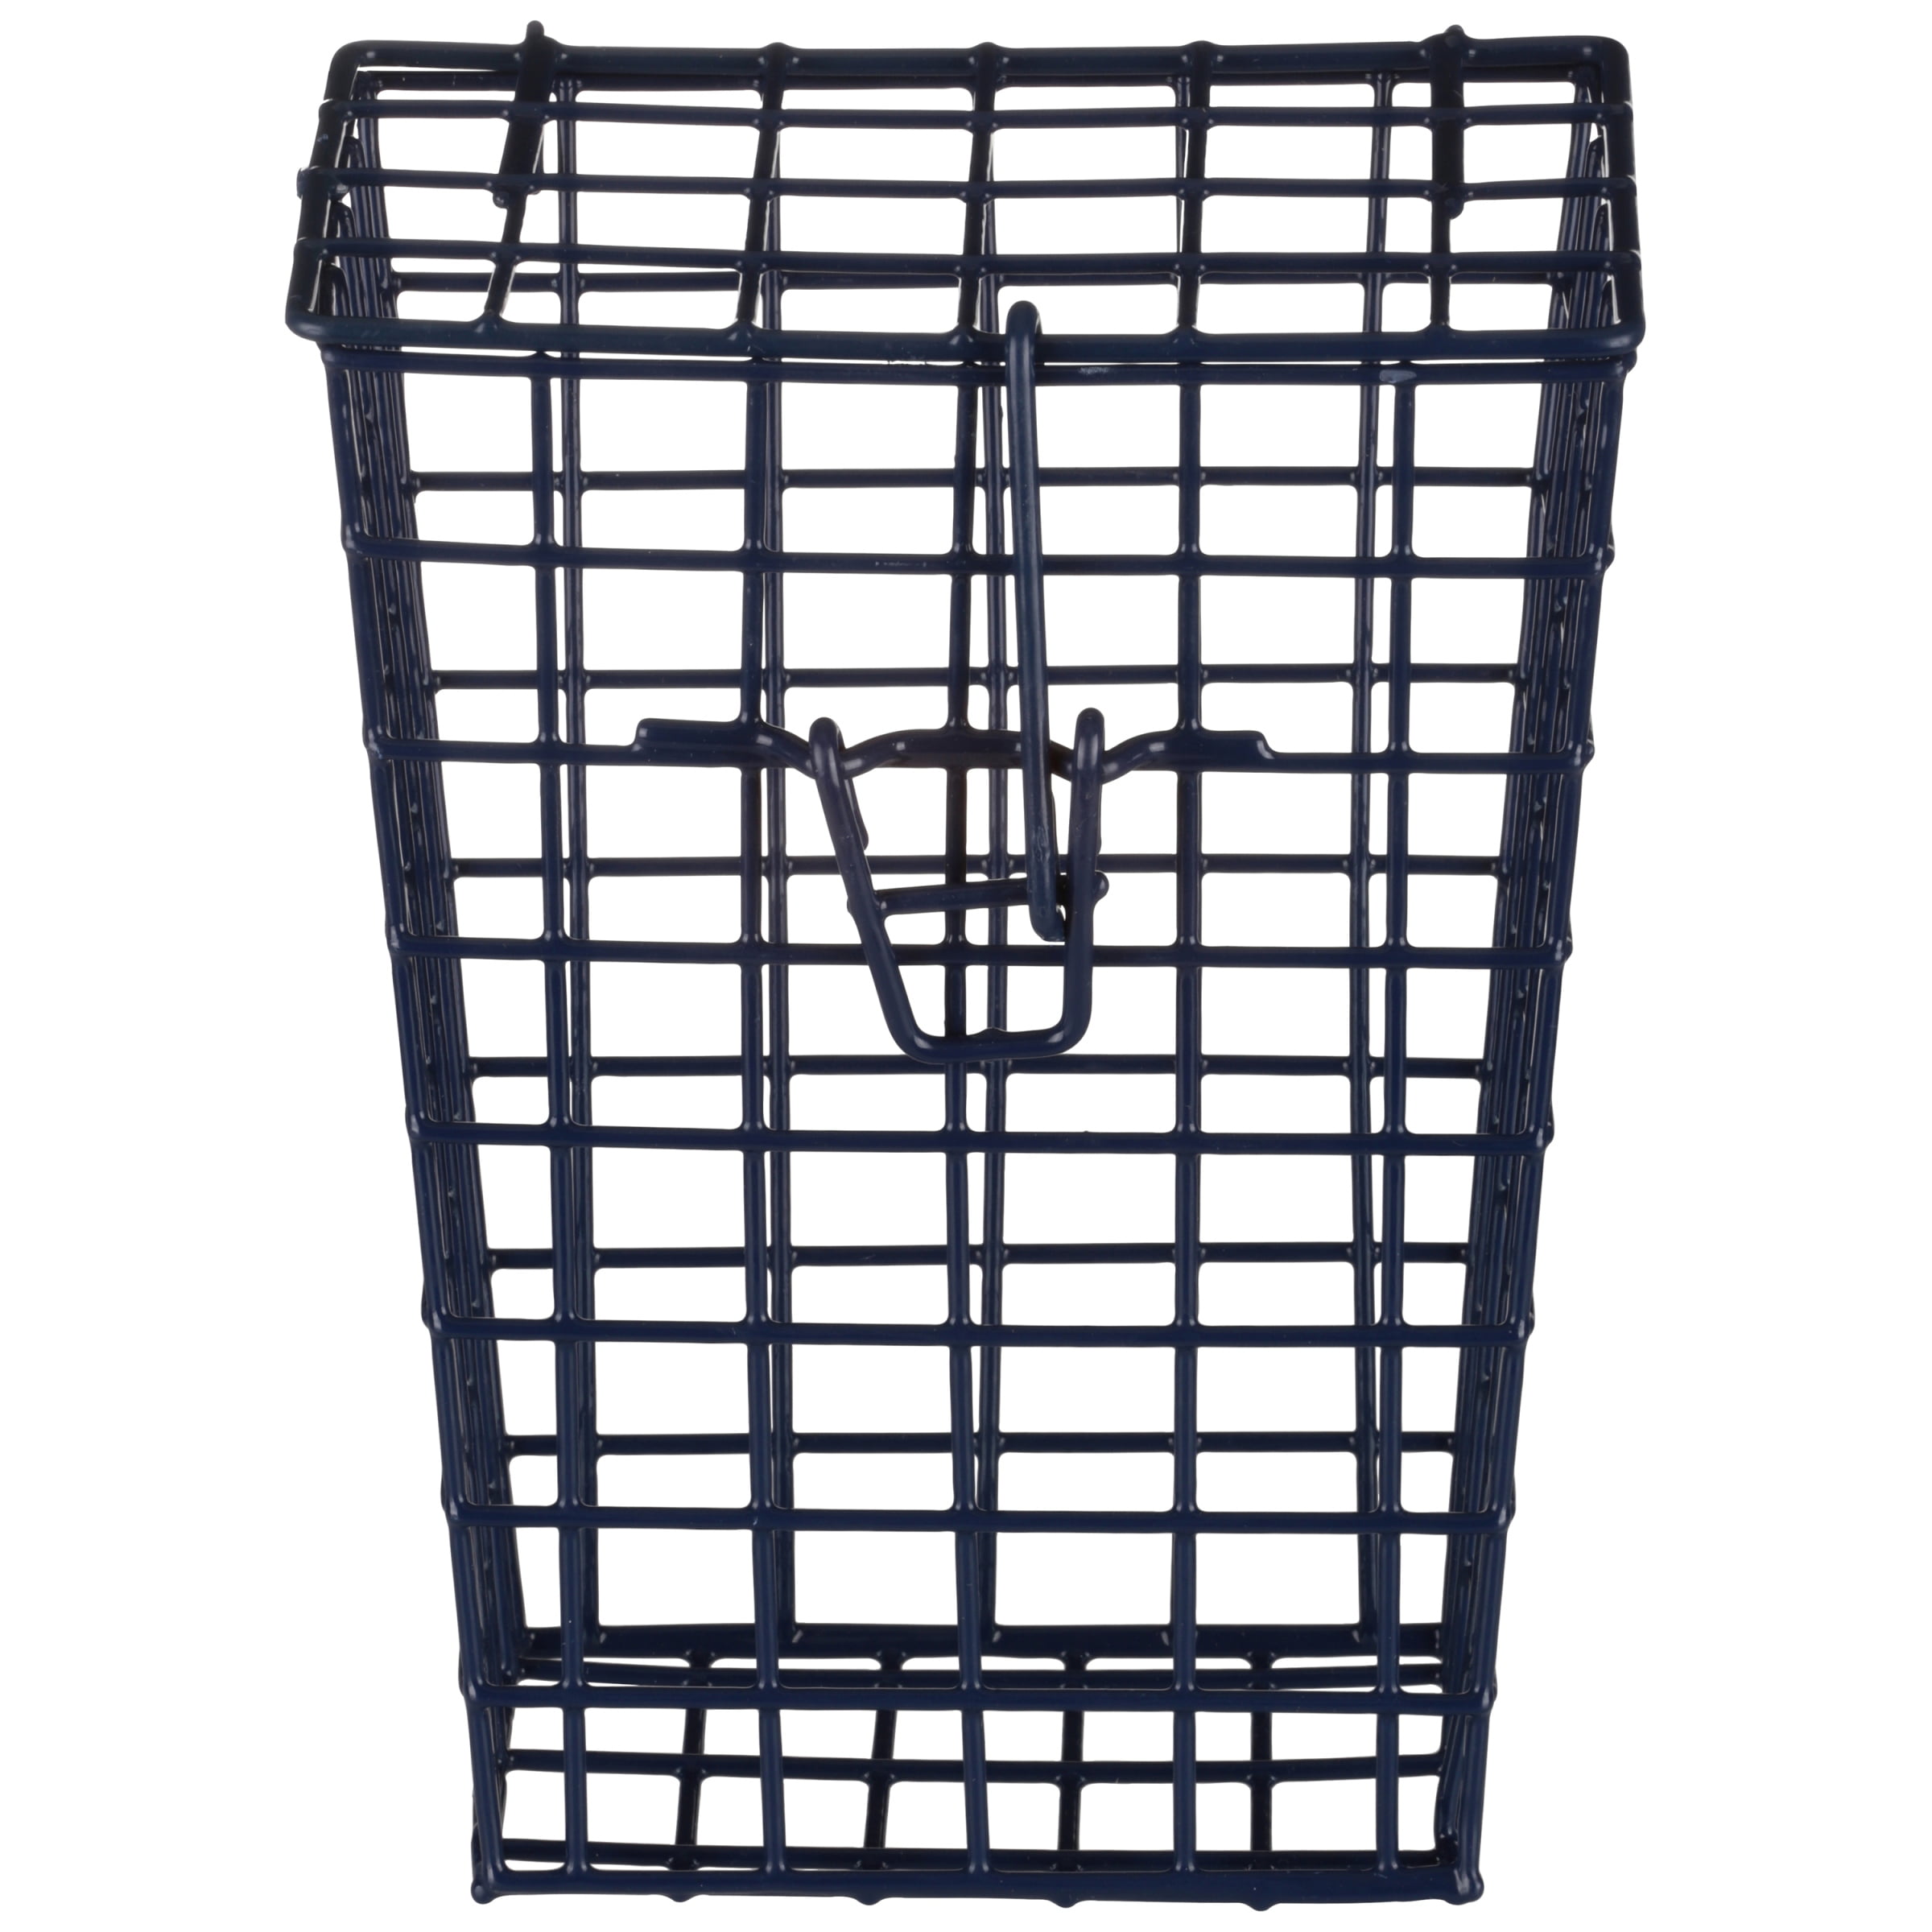 Danielson Steel Crab Trap Bait Cage Fishing Equipment, Black, 6 x 4 x 8  